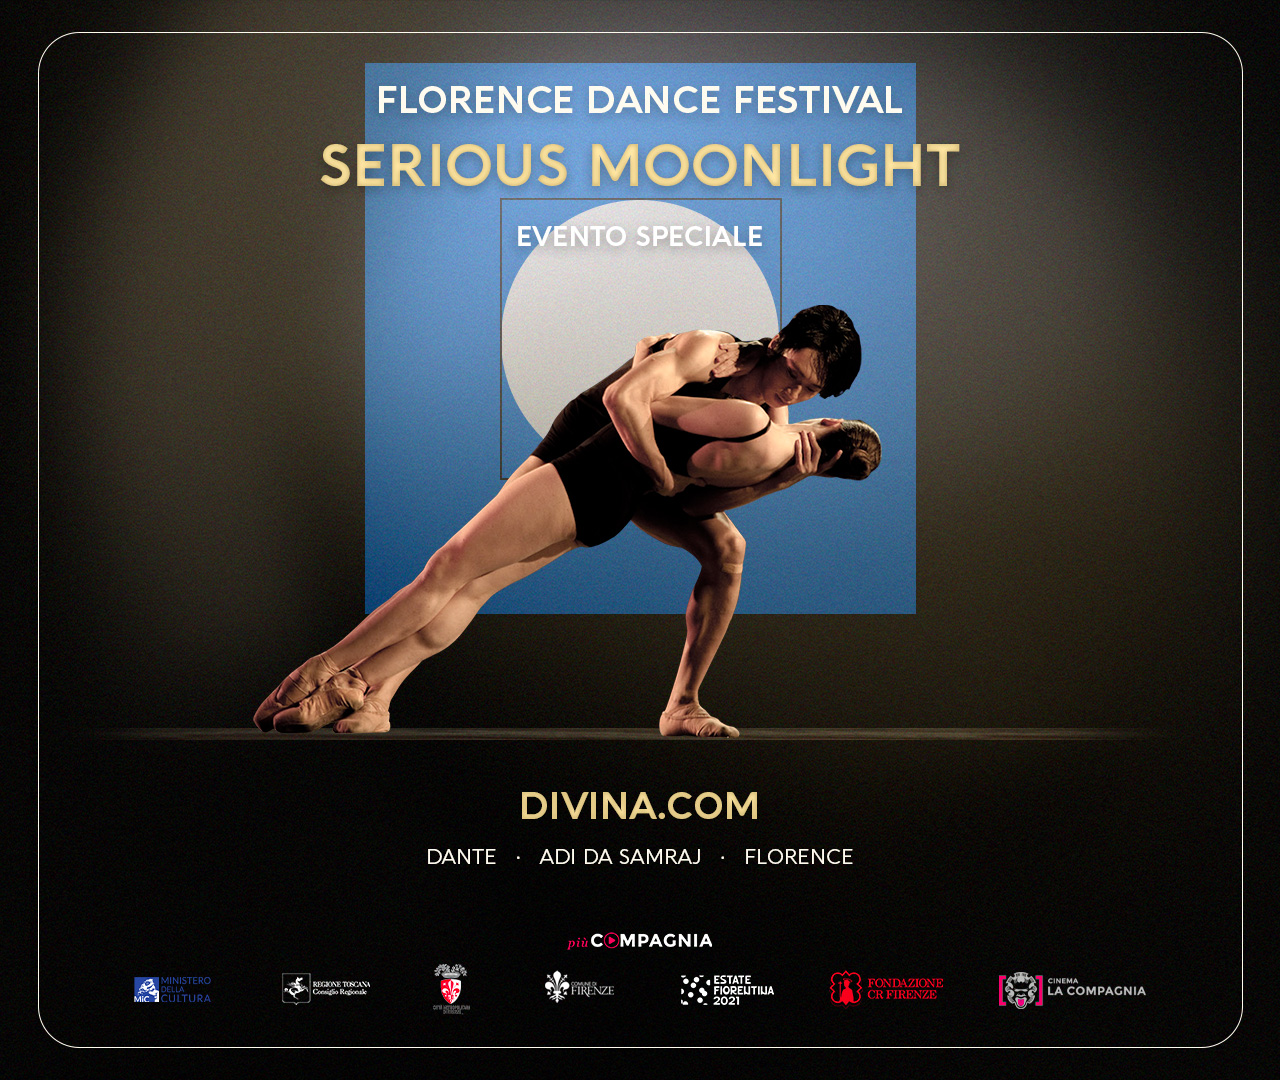 Digital Dance Platform - Sesto Episodio - Divina.com - Florence Dance Festival